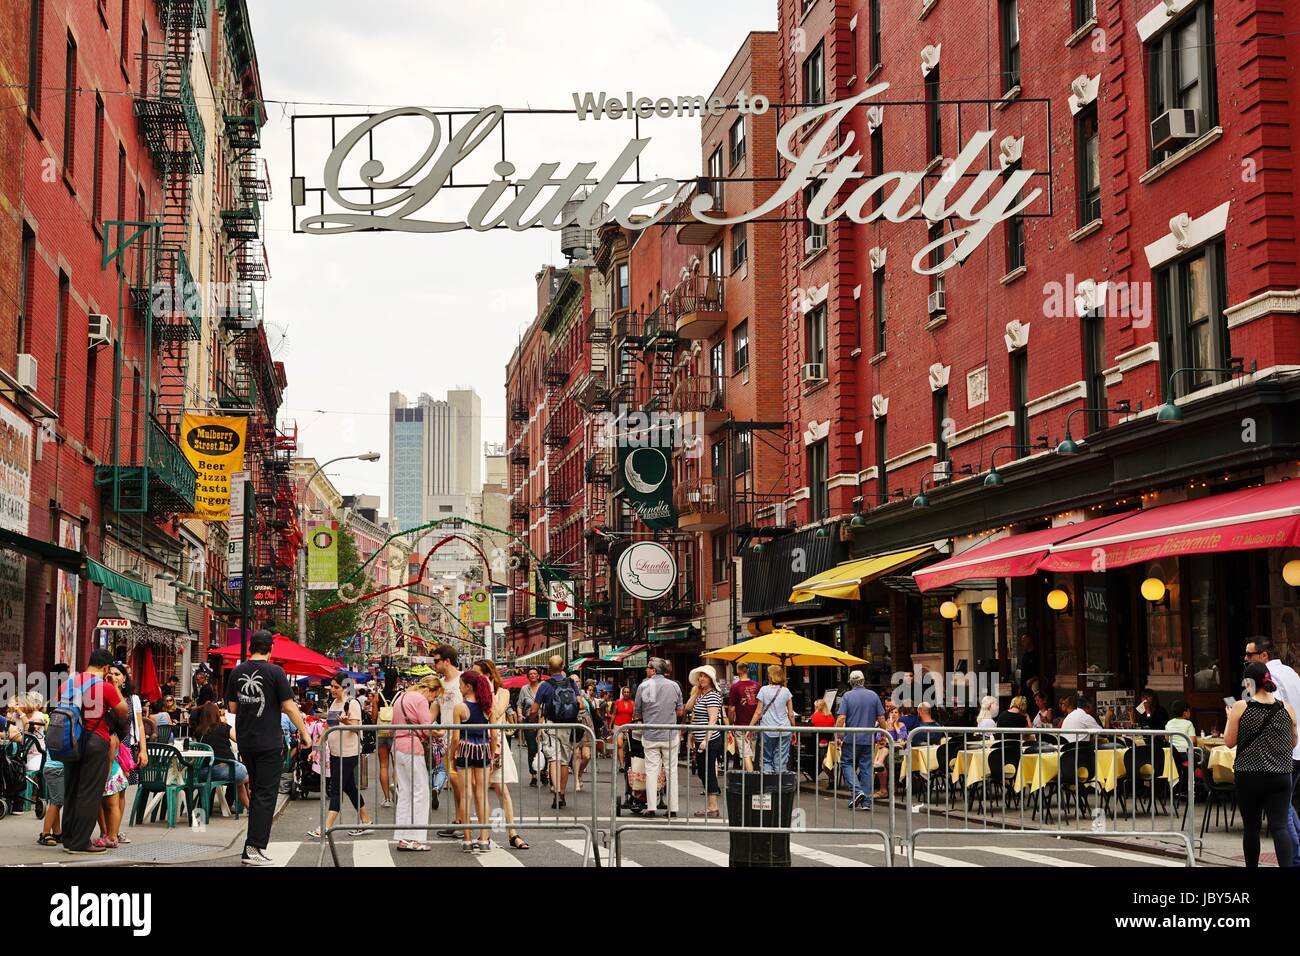 The Little Italy neighborhood in lower Manhattan near Mulberry Street Stock Photo